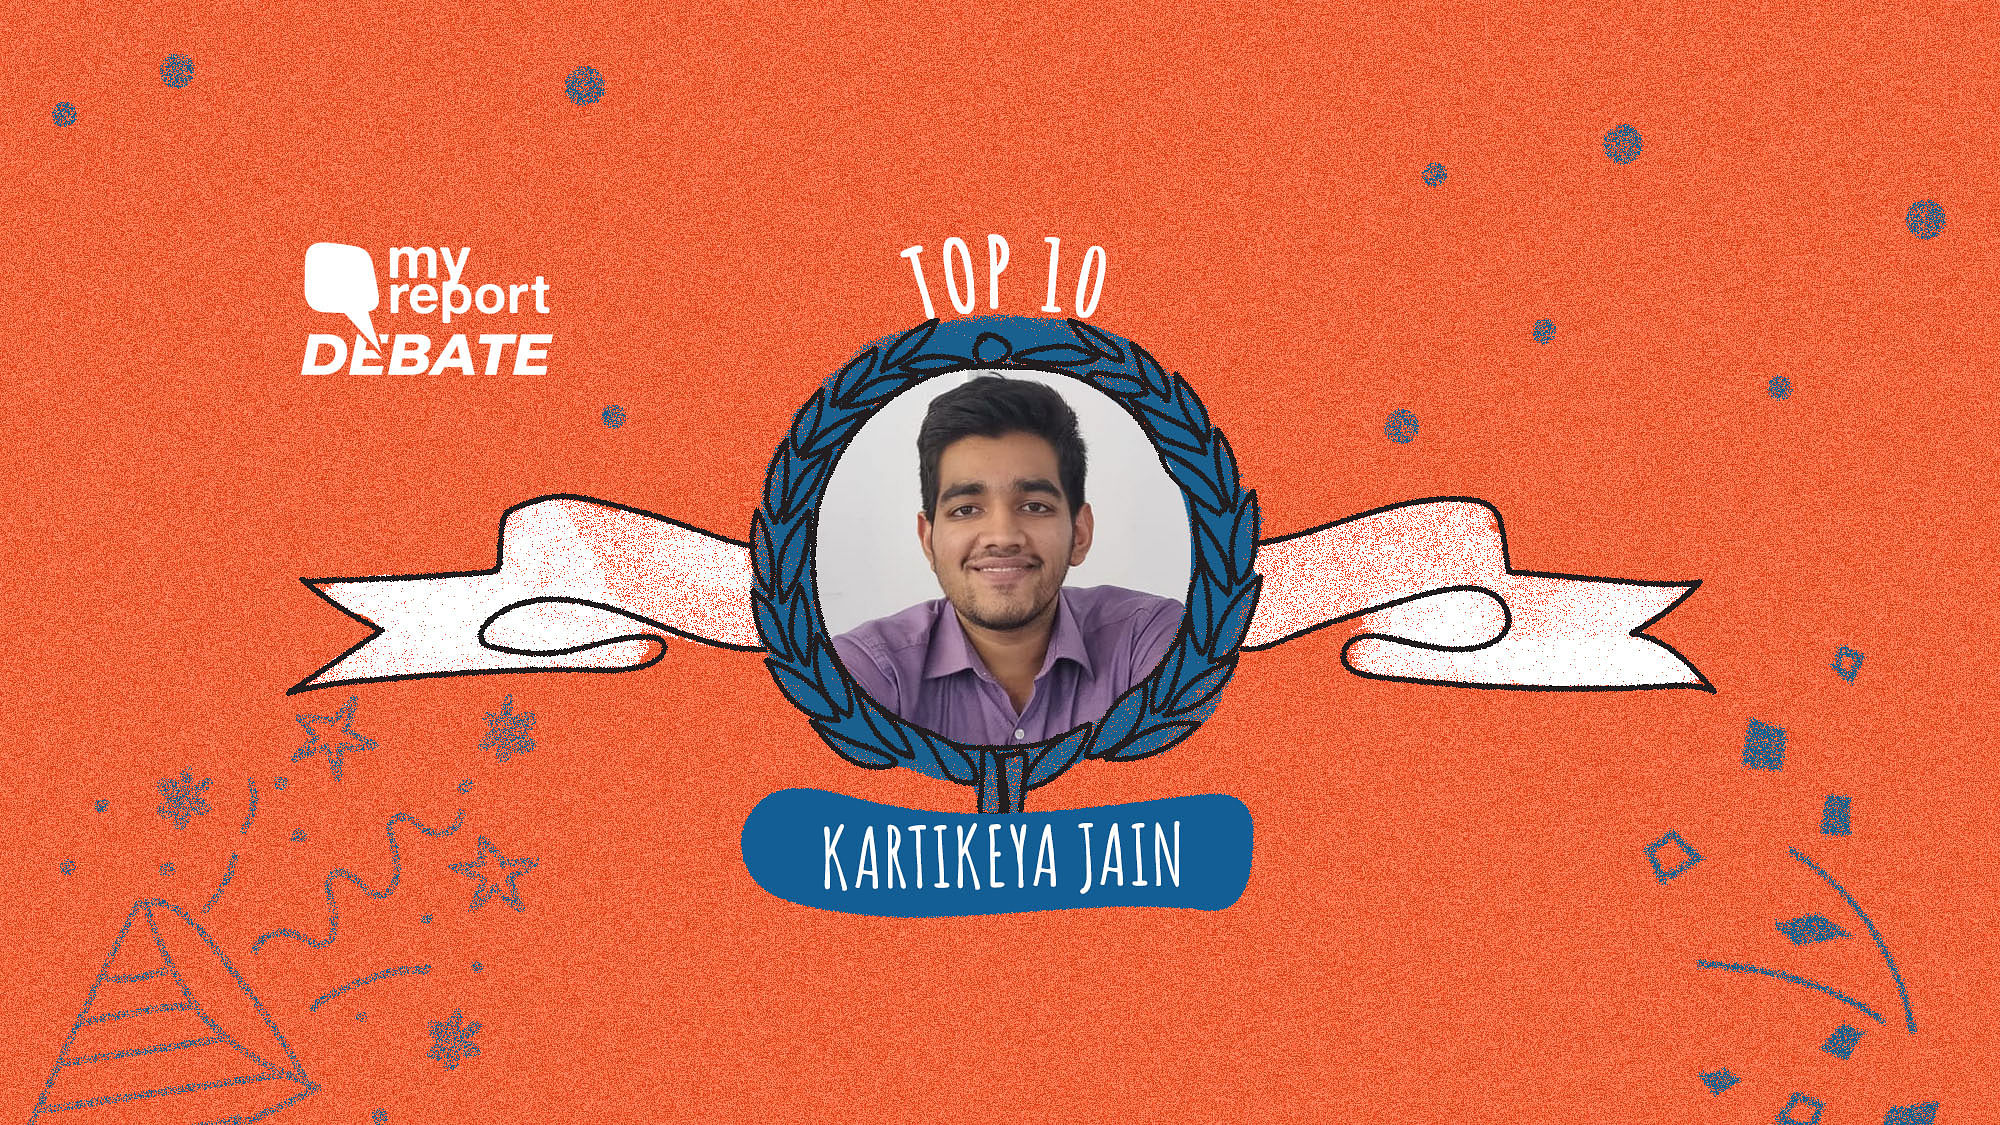 Kartikeya Jain is among the Top 10 of the My Report Debate.&nbsp;